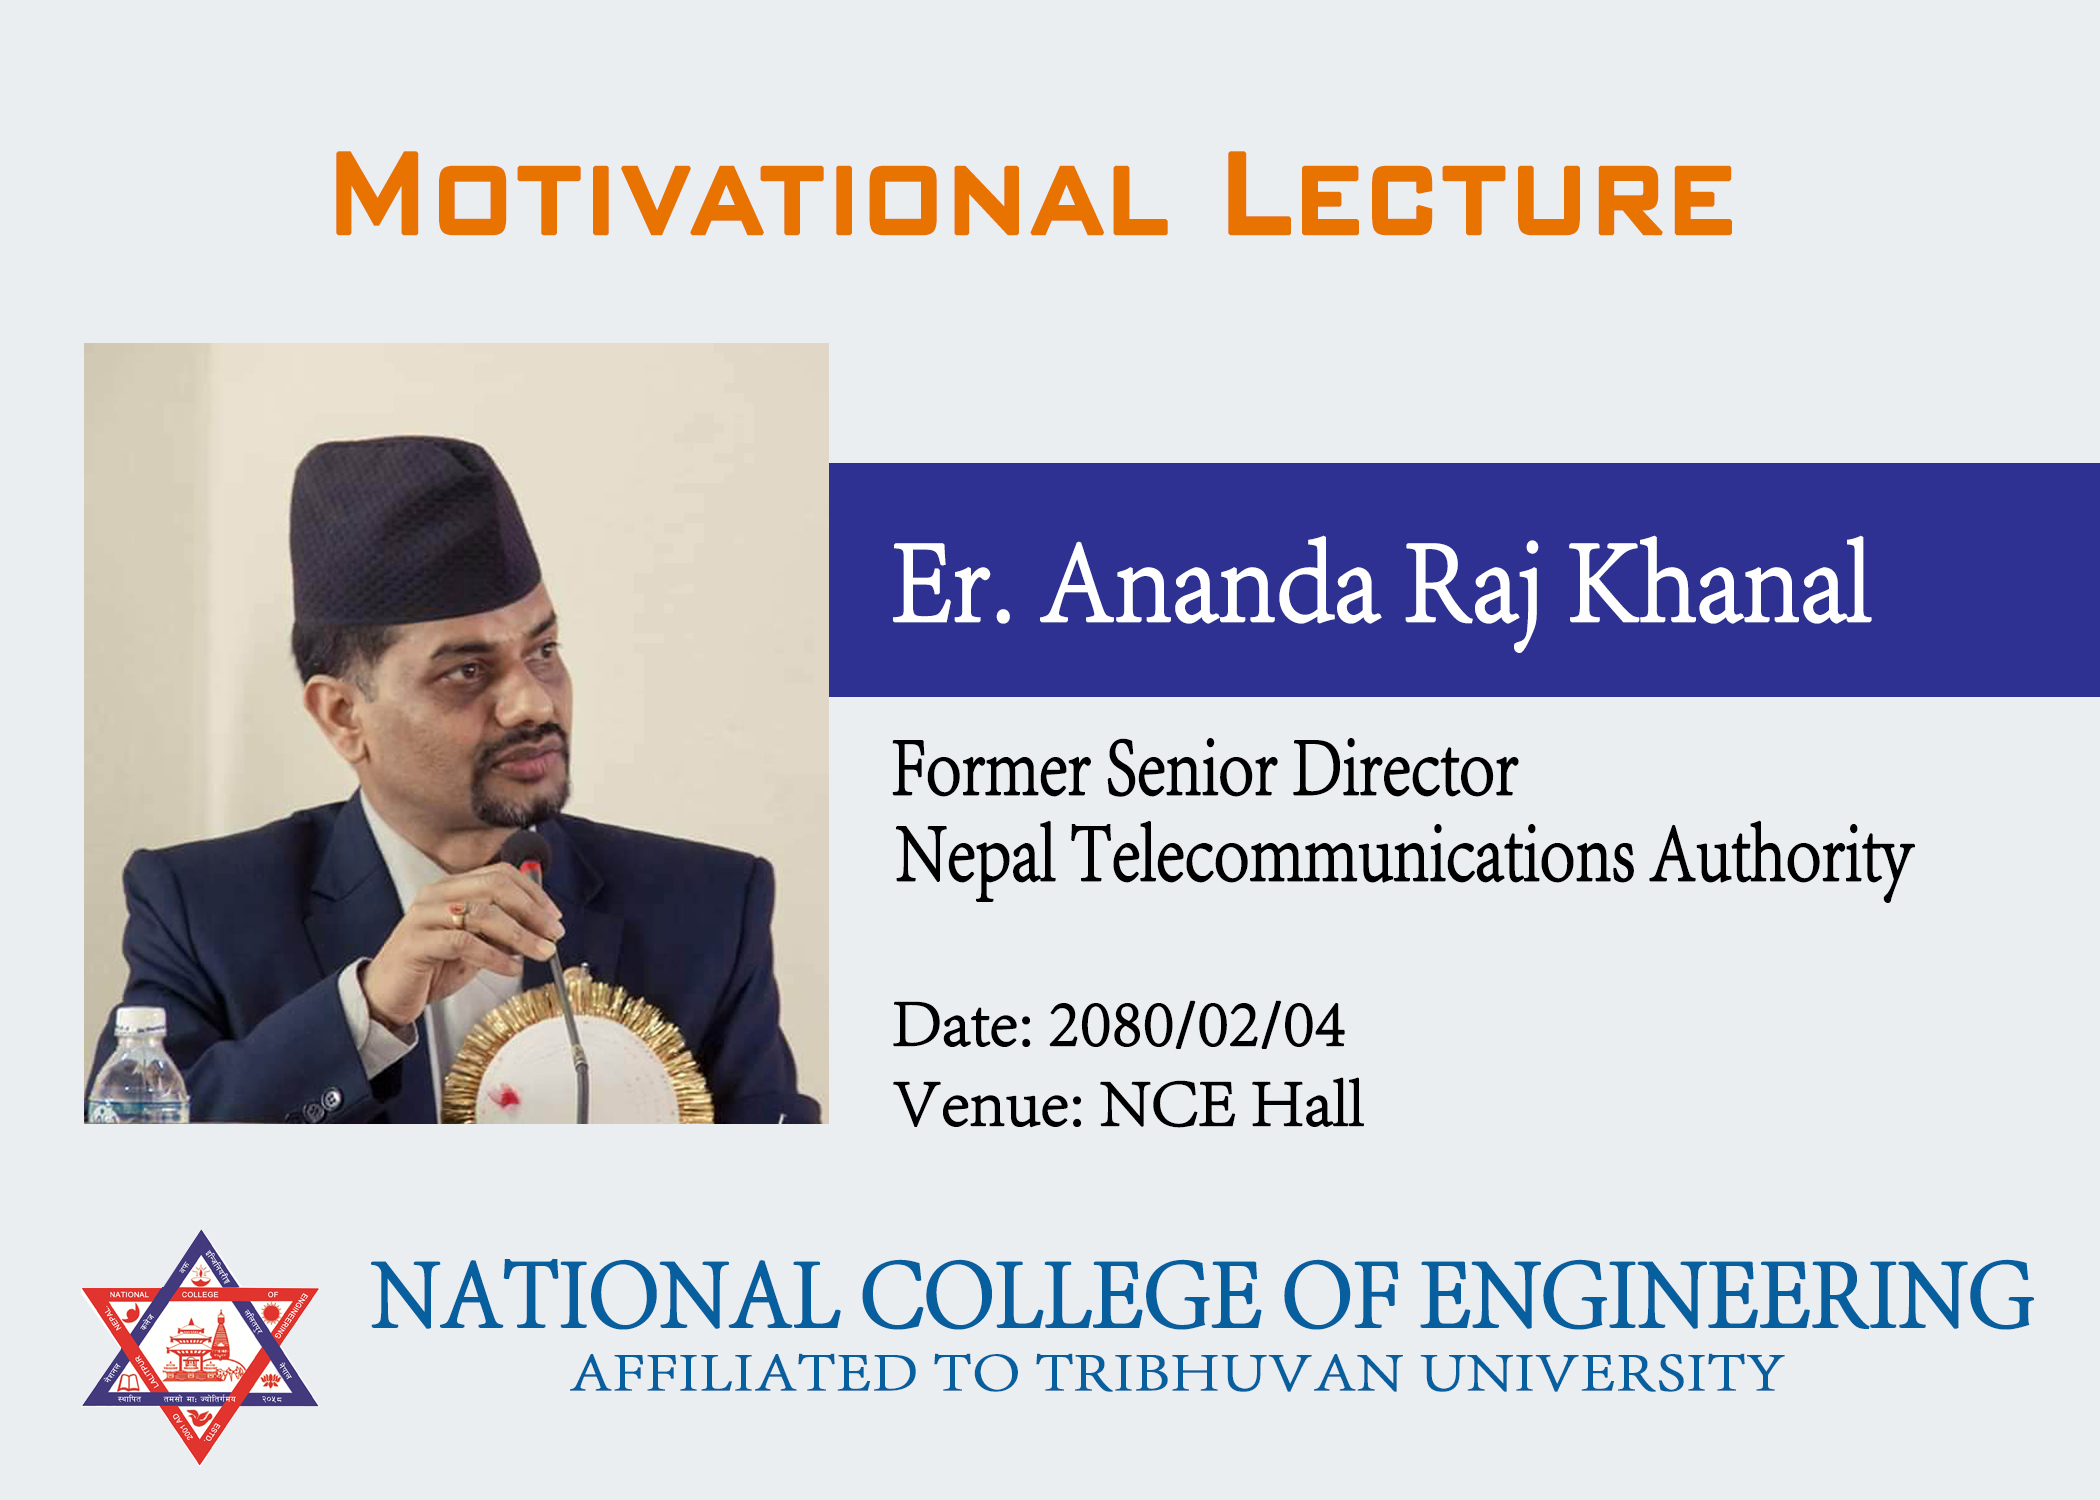 Motivational Lecture by Er. Ananda Raj Khanal